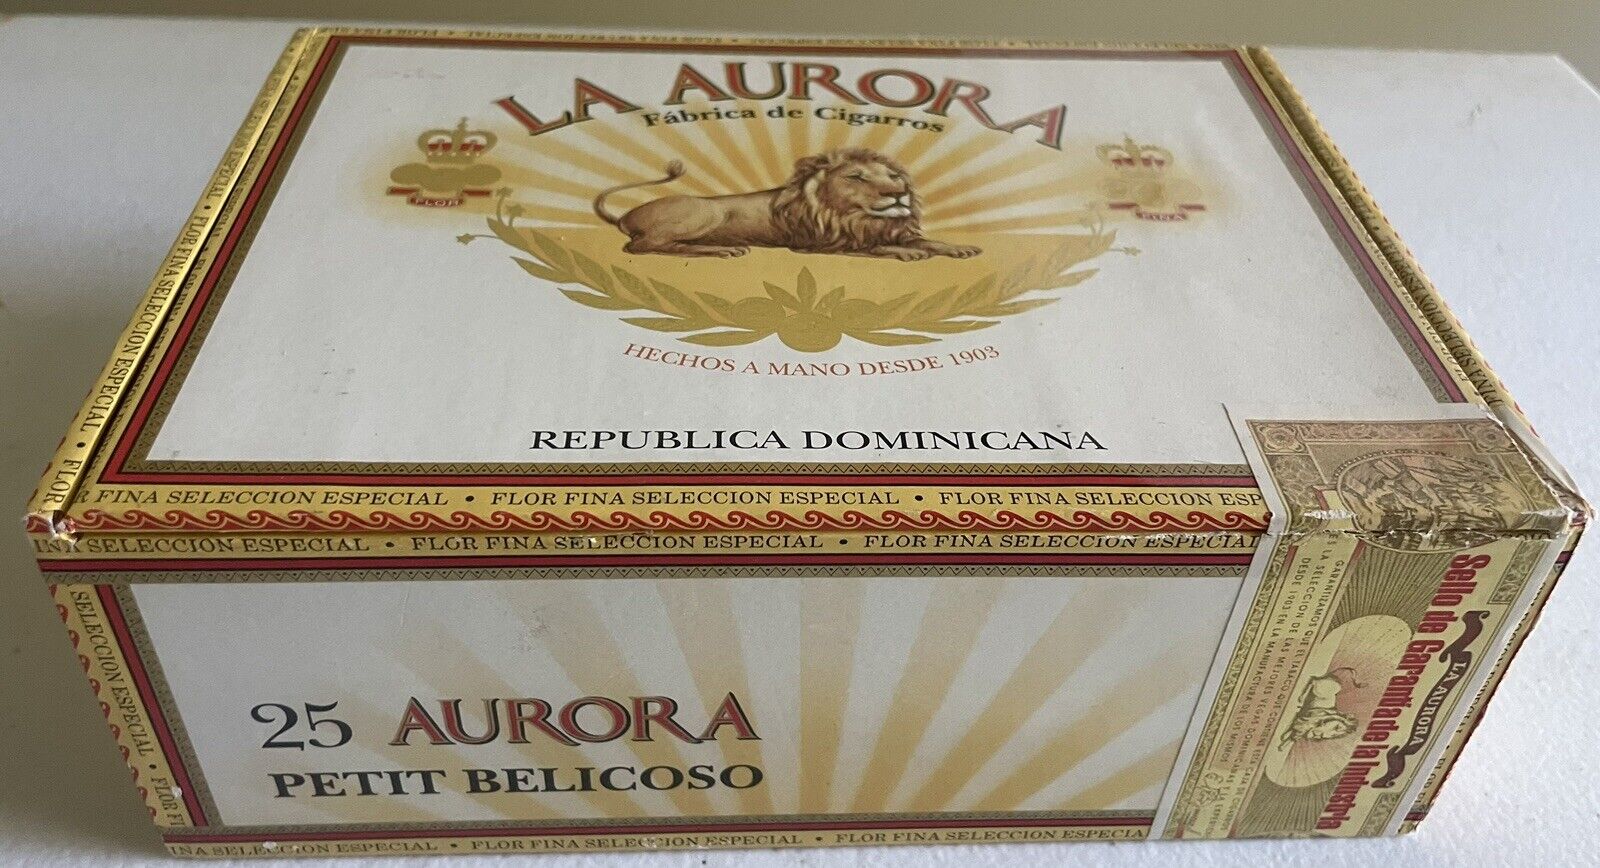 La Aurora Fabrica de Cigarros Republica Dominicana Petit Belicoso Cigar Box